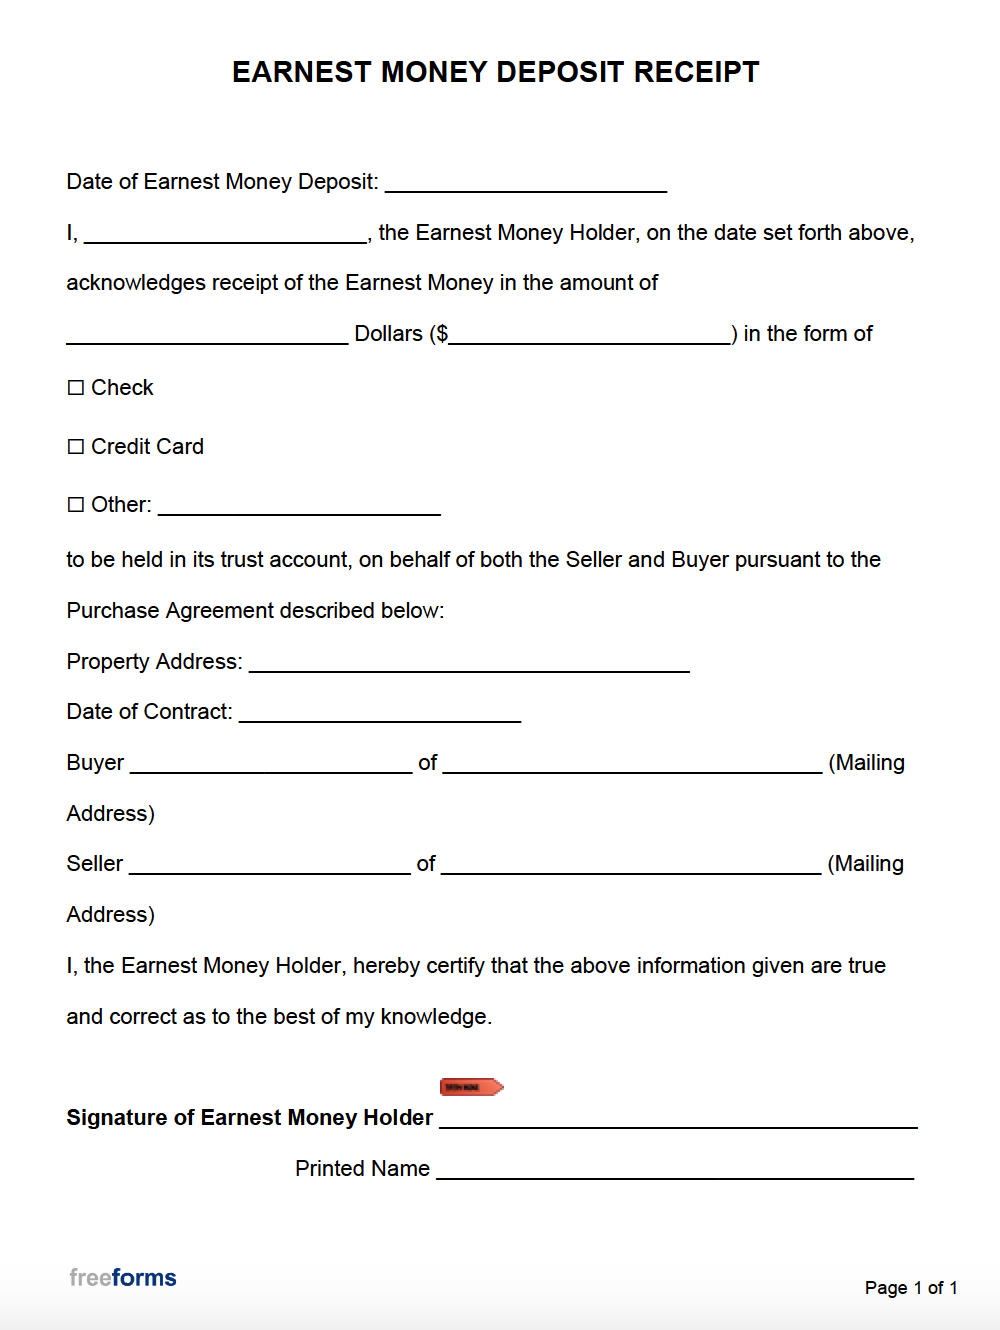 Free Earnest Money Receipt  PDF  WORD For Good Faith Deposit Agreement Form With Good Faith Deposit Agreement Form